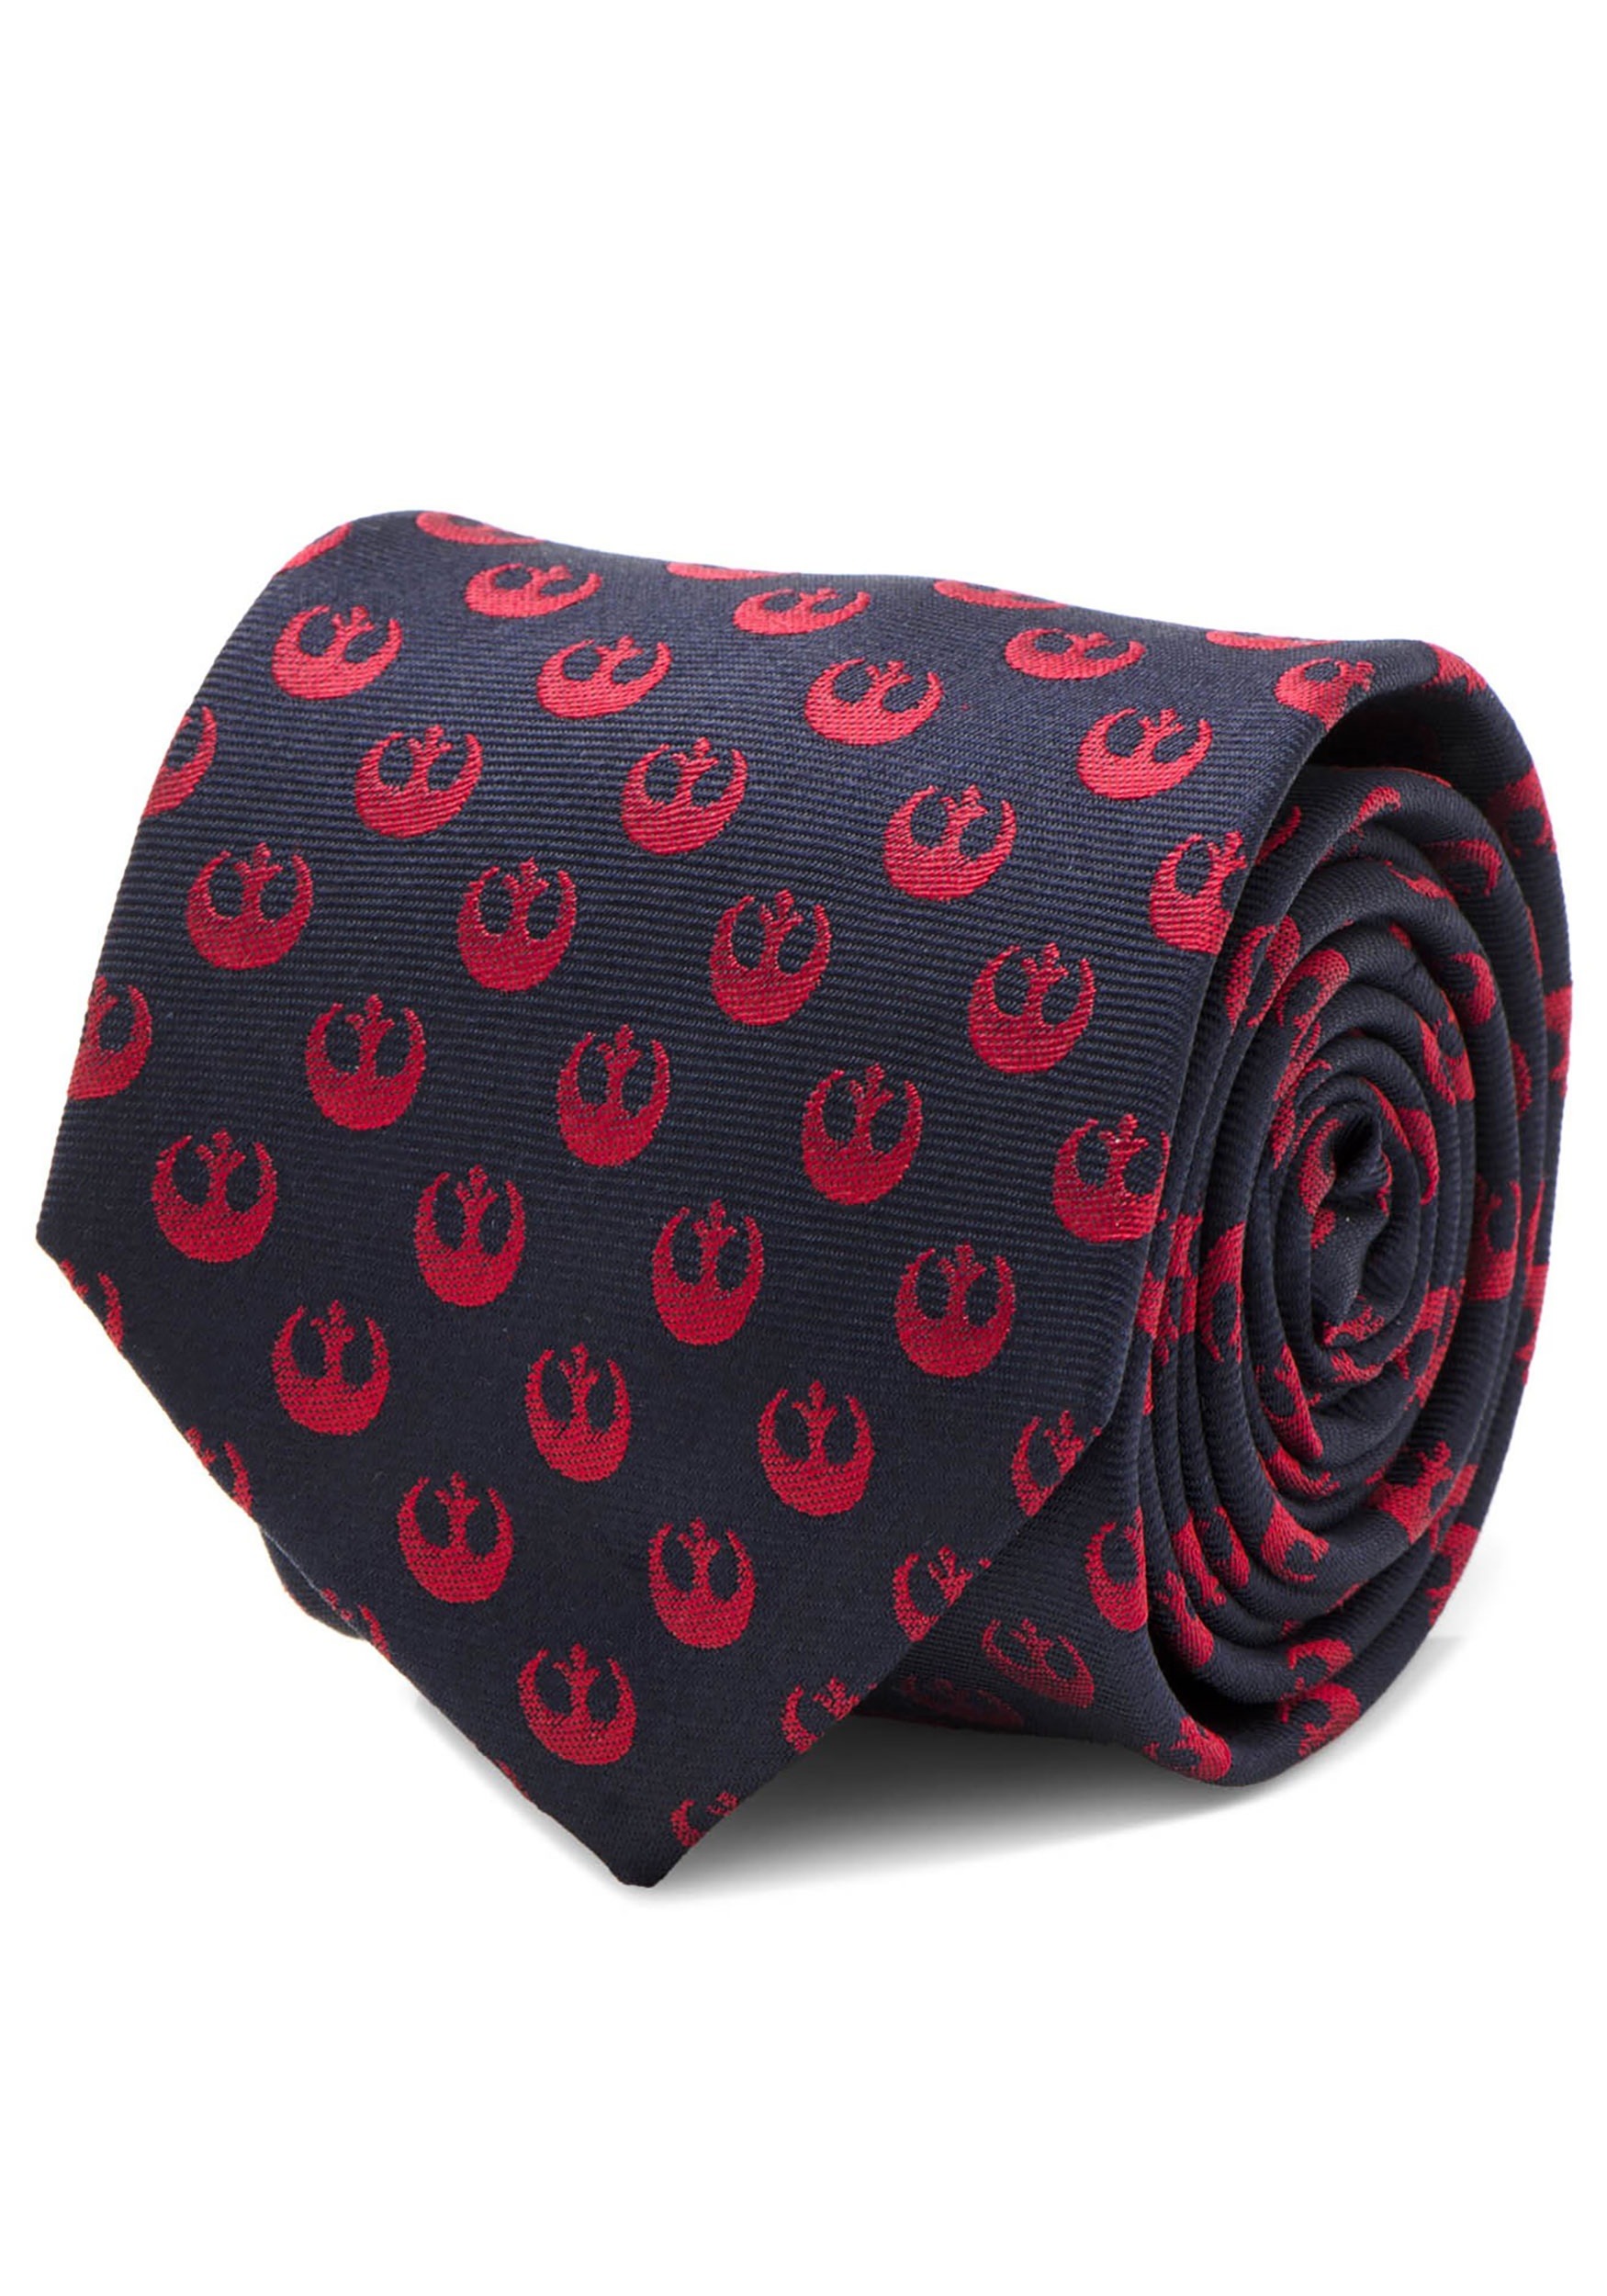 Star Wars Rebel Symbol Mens Tie